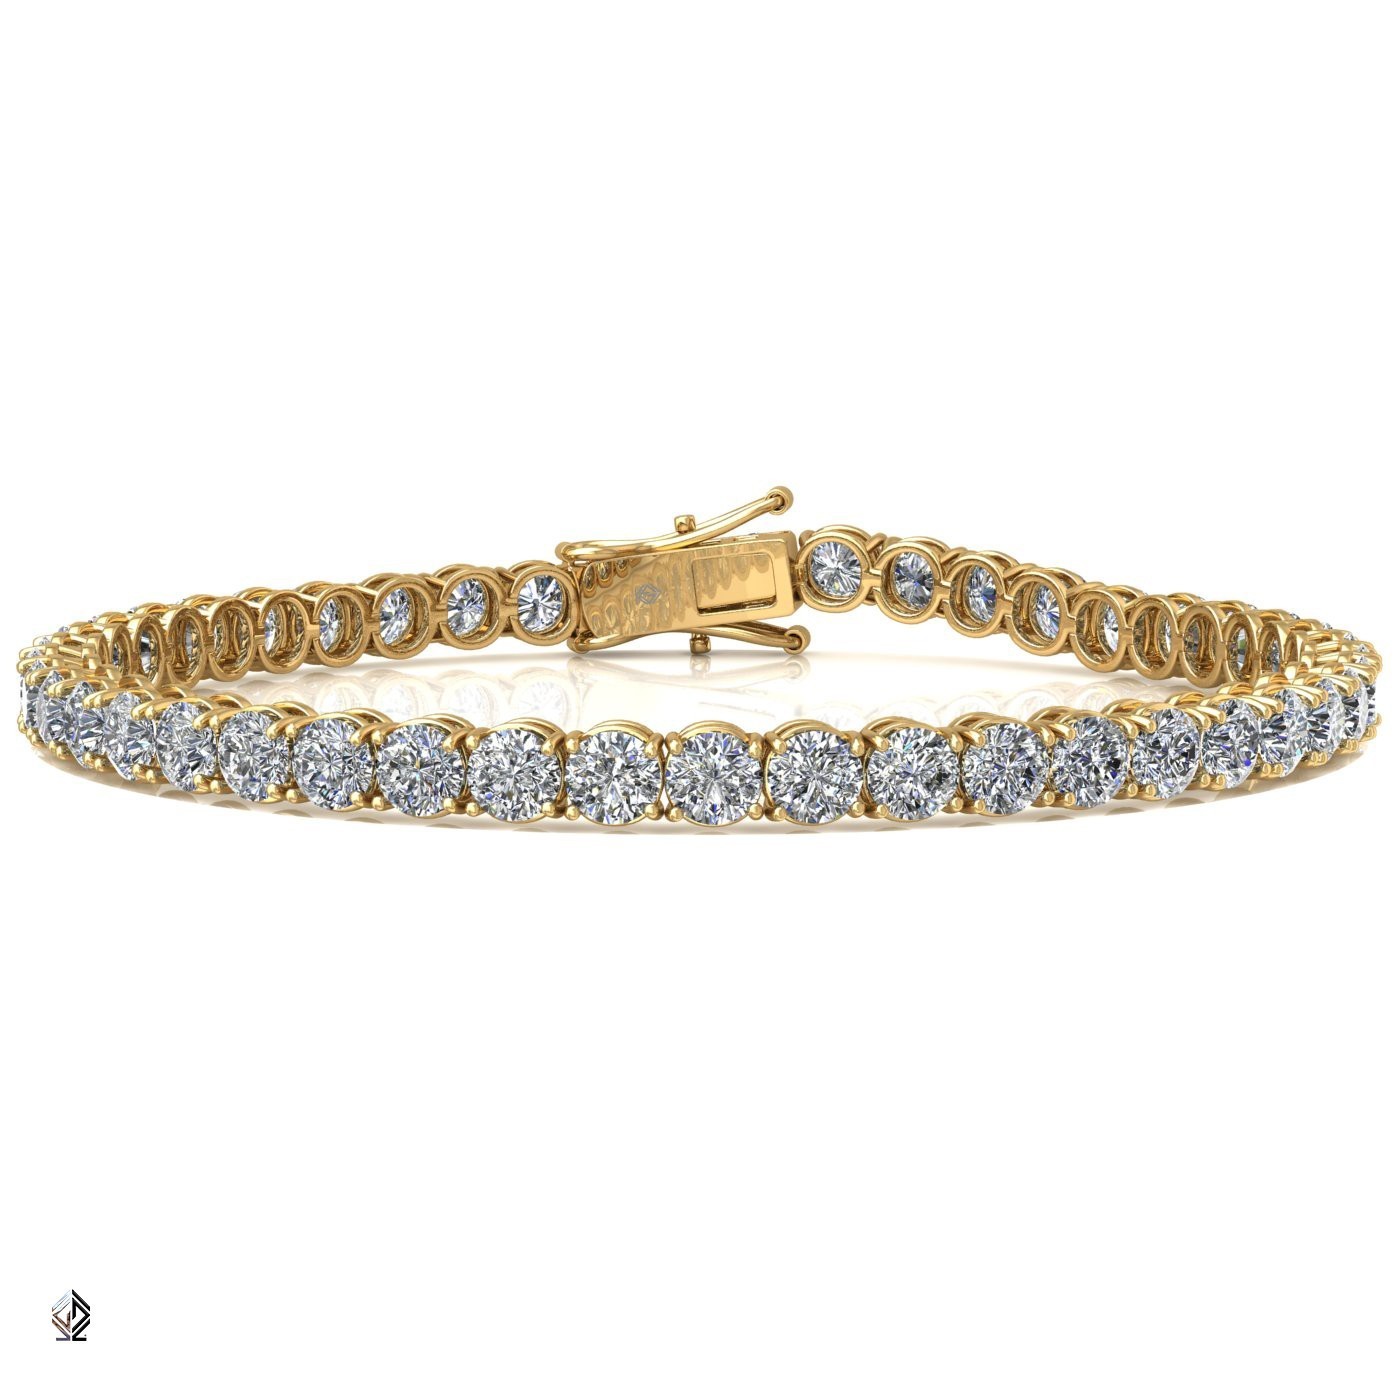 18k yellow gold 3.3mm 4 prong round shape diamond tennis bracelet in round setting